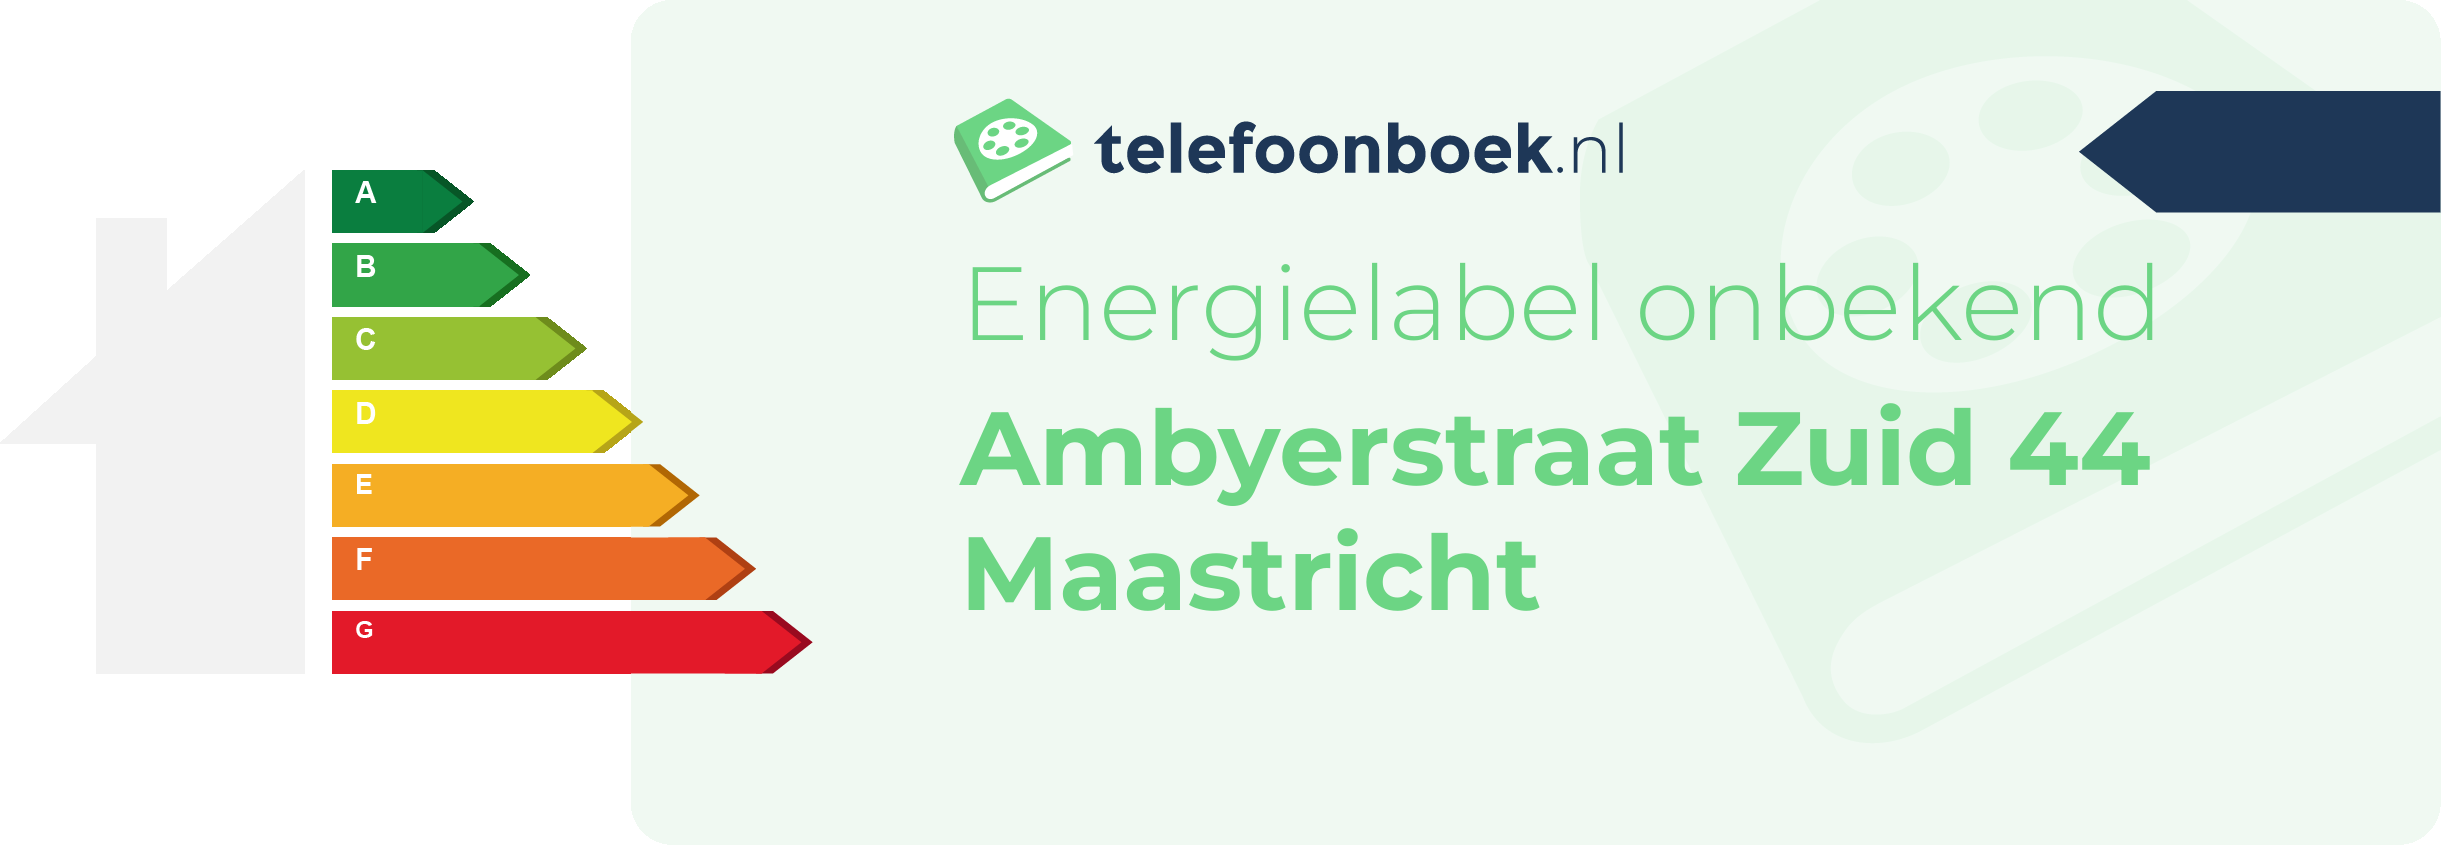 Energielabel Ambyerstraat Zuid 44 Maastricht